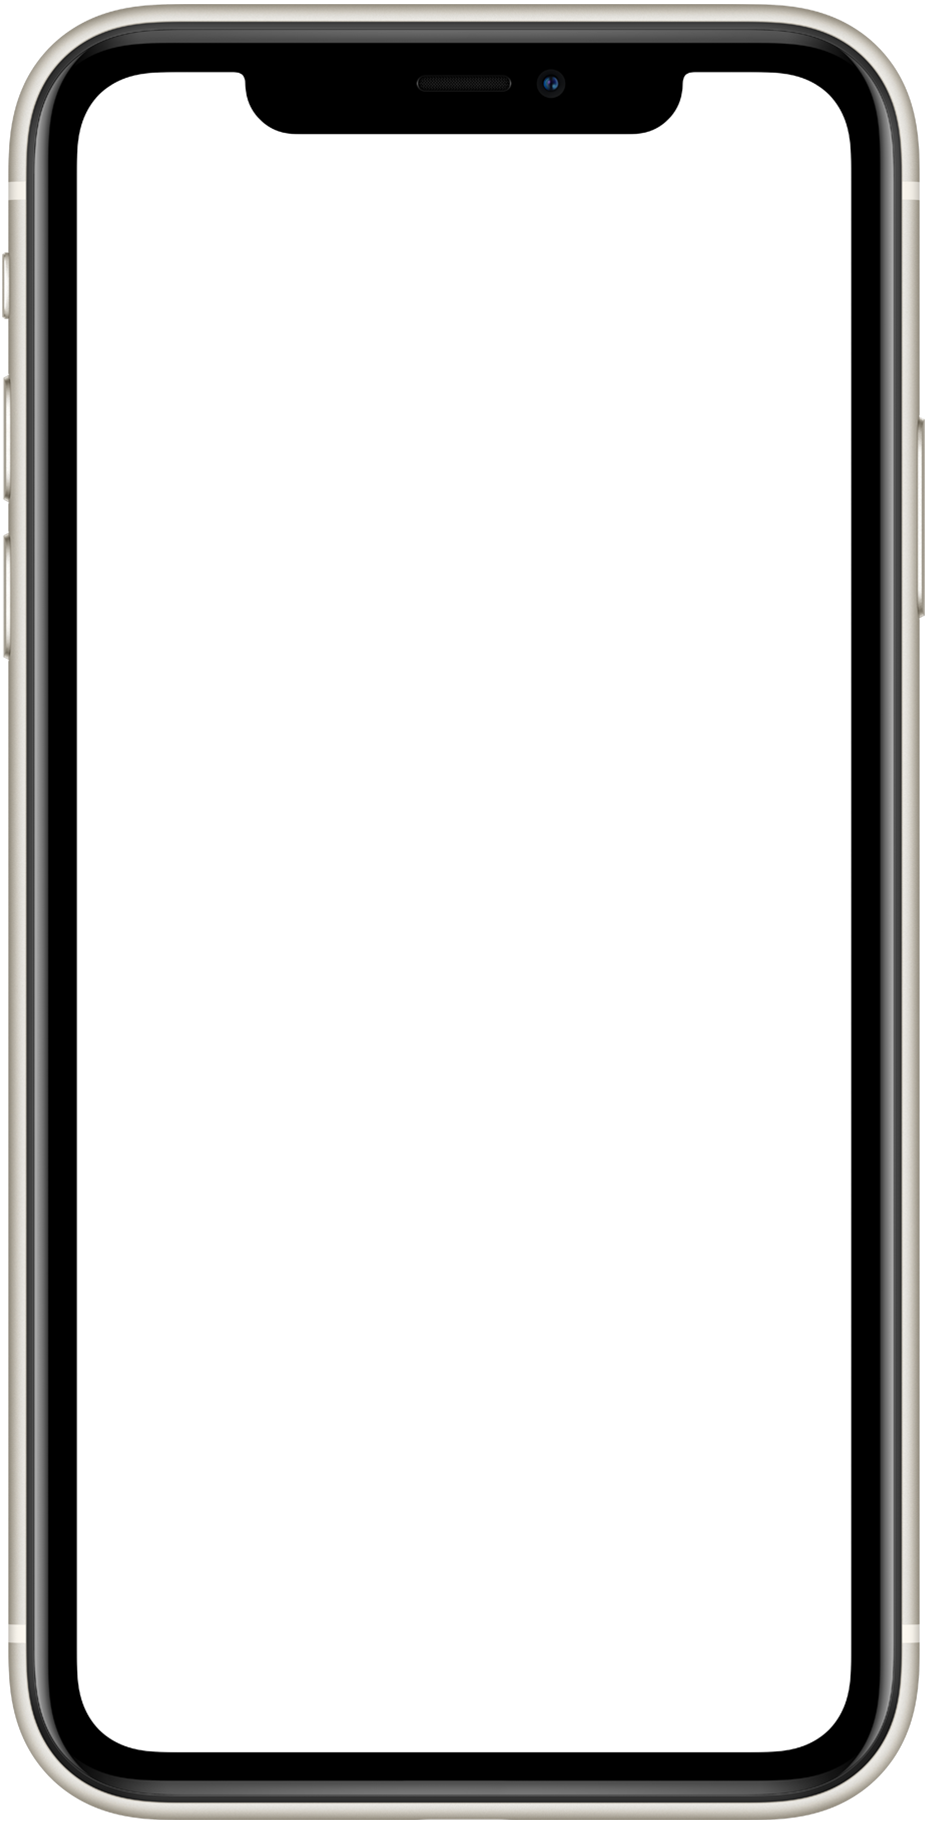 IPhone Transparent Image No Background